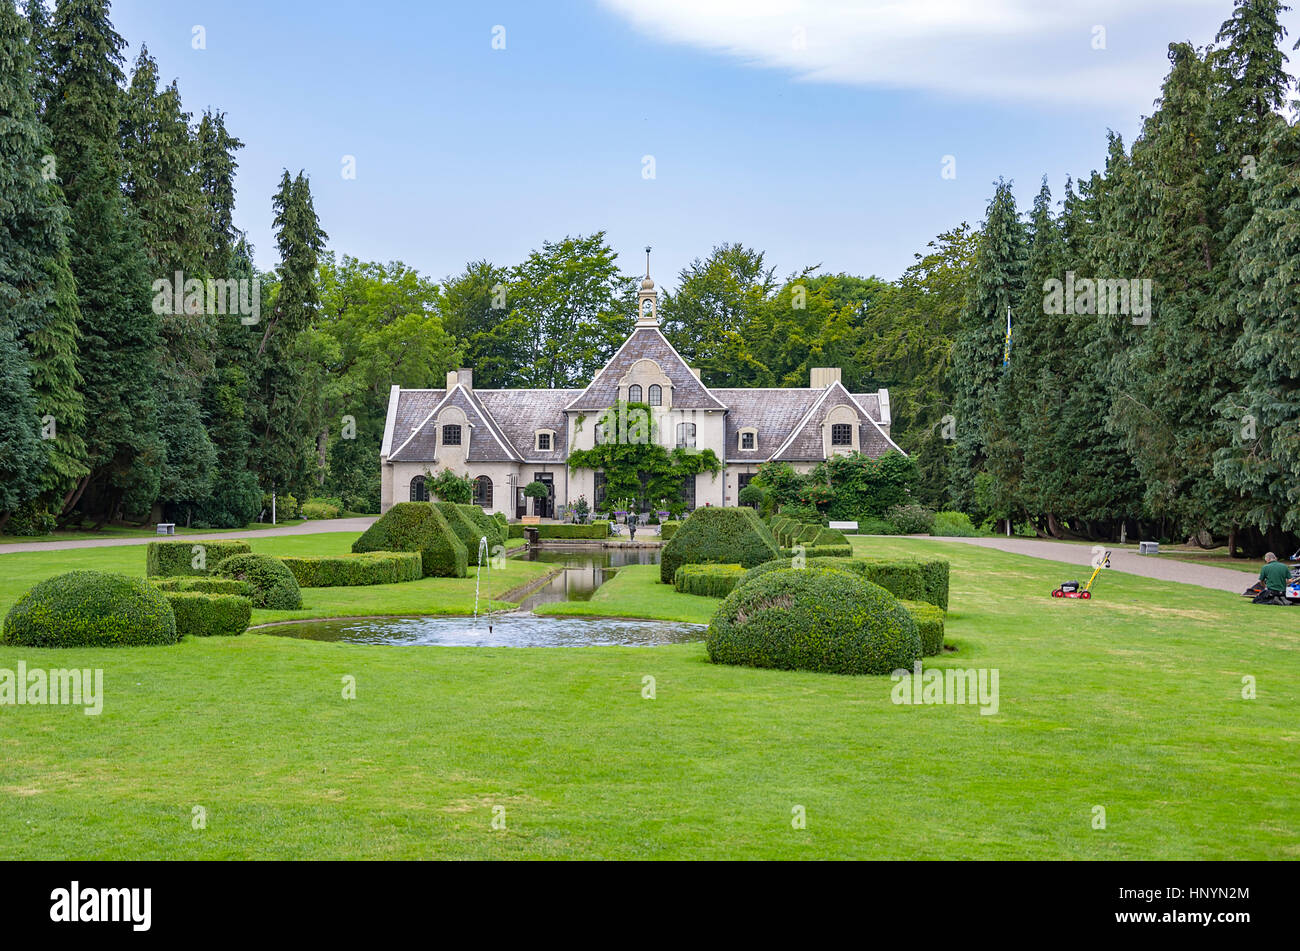 Landscaping and manor house of Norrviken Gardens (Norrvikens trädgårdar) in Bastad, Skane County, Sweden. Stock Photo